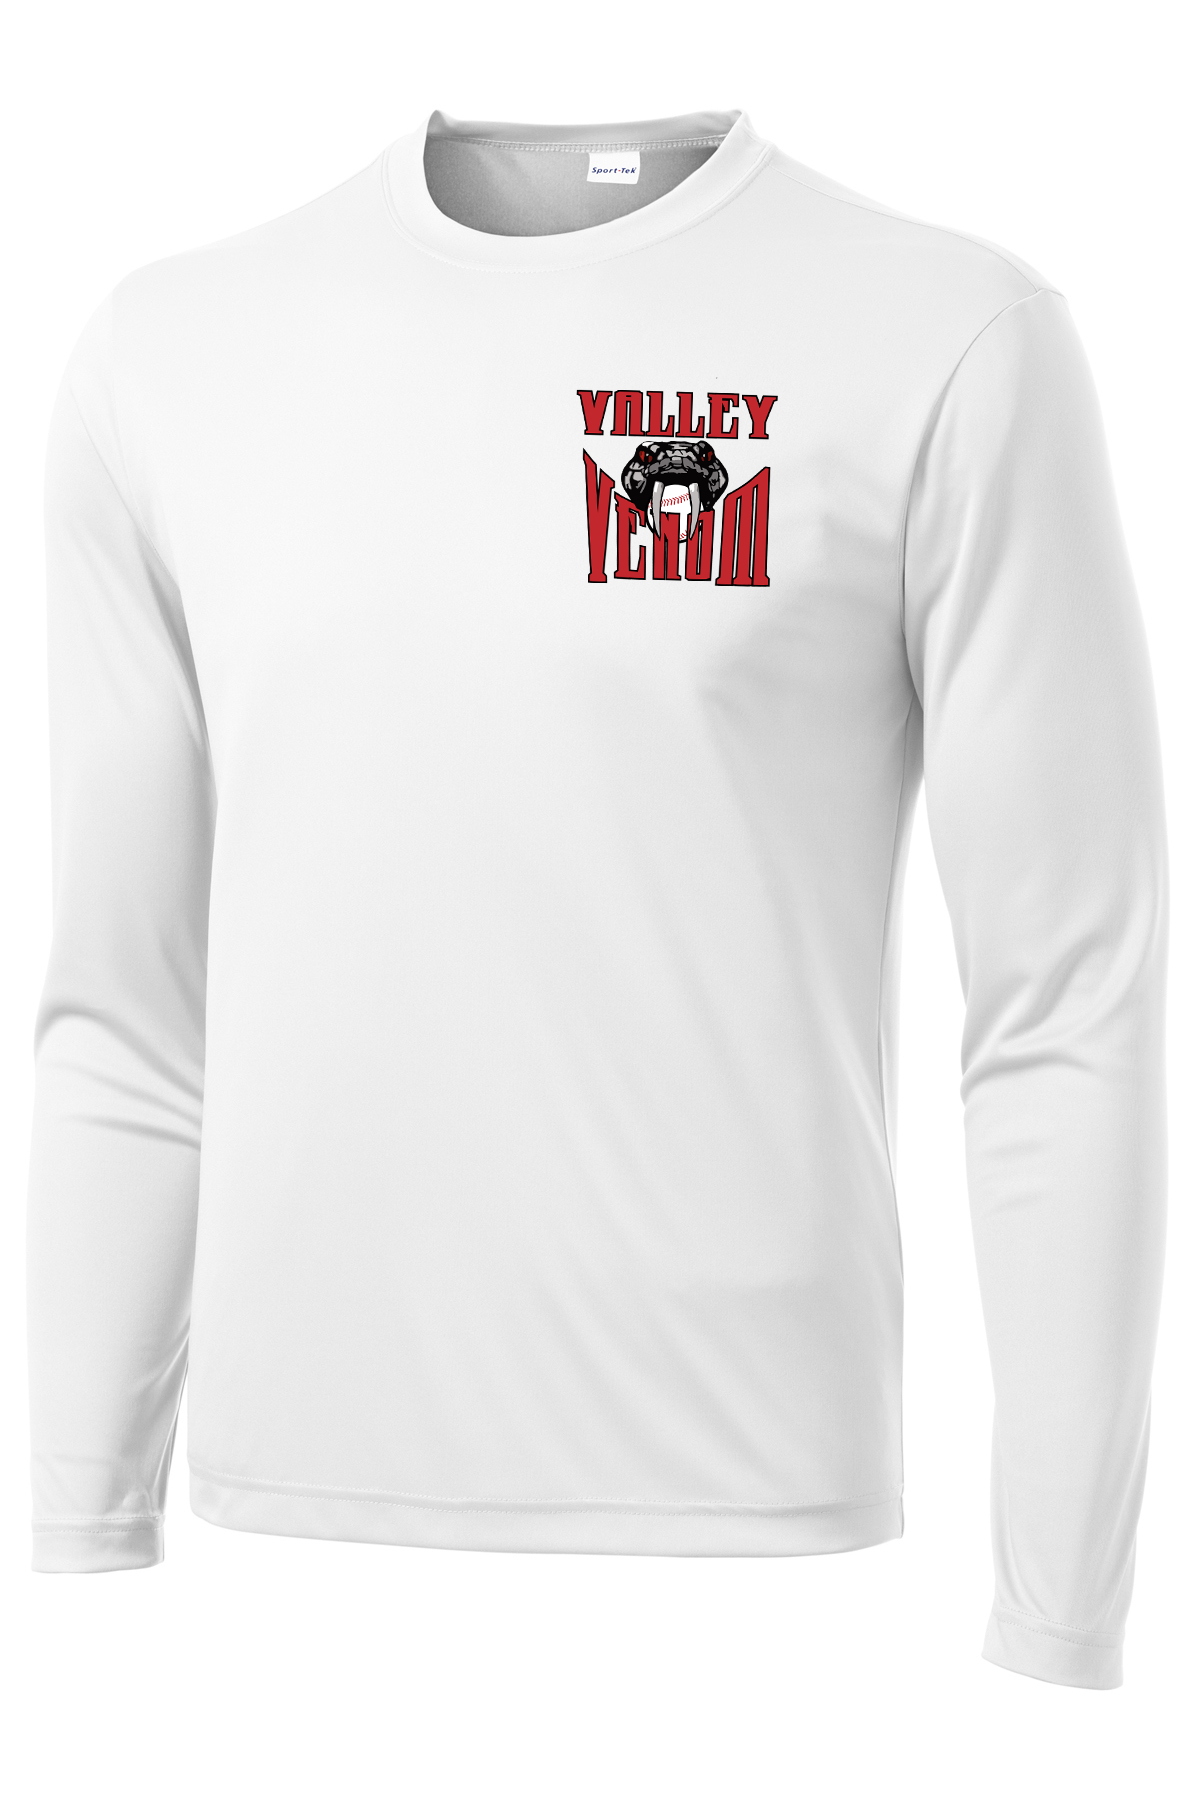 Valley Venom Baseball Long Sleeve Performance Shirt